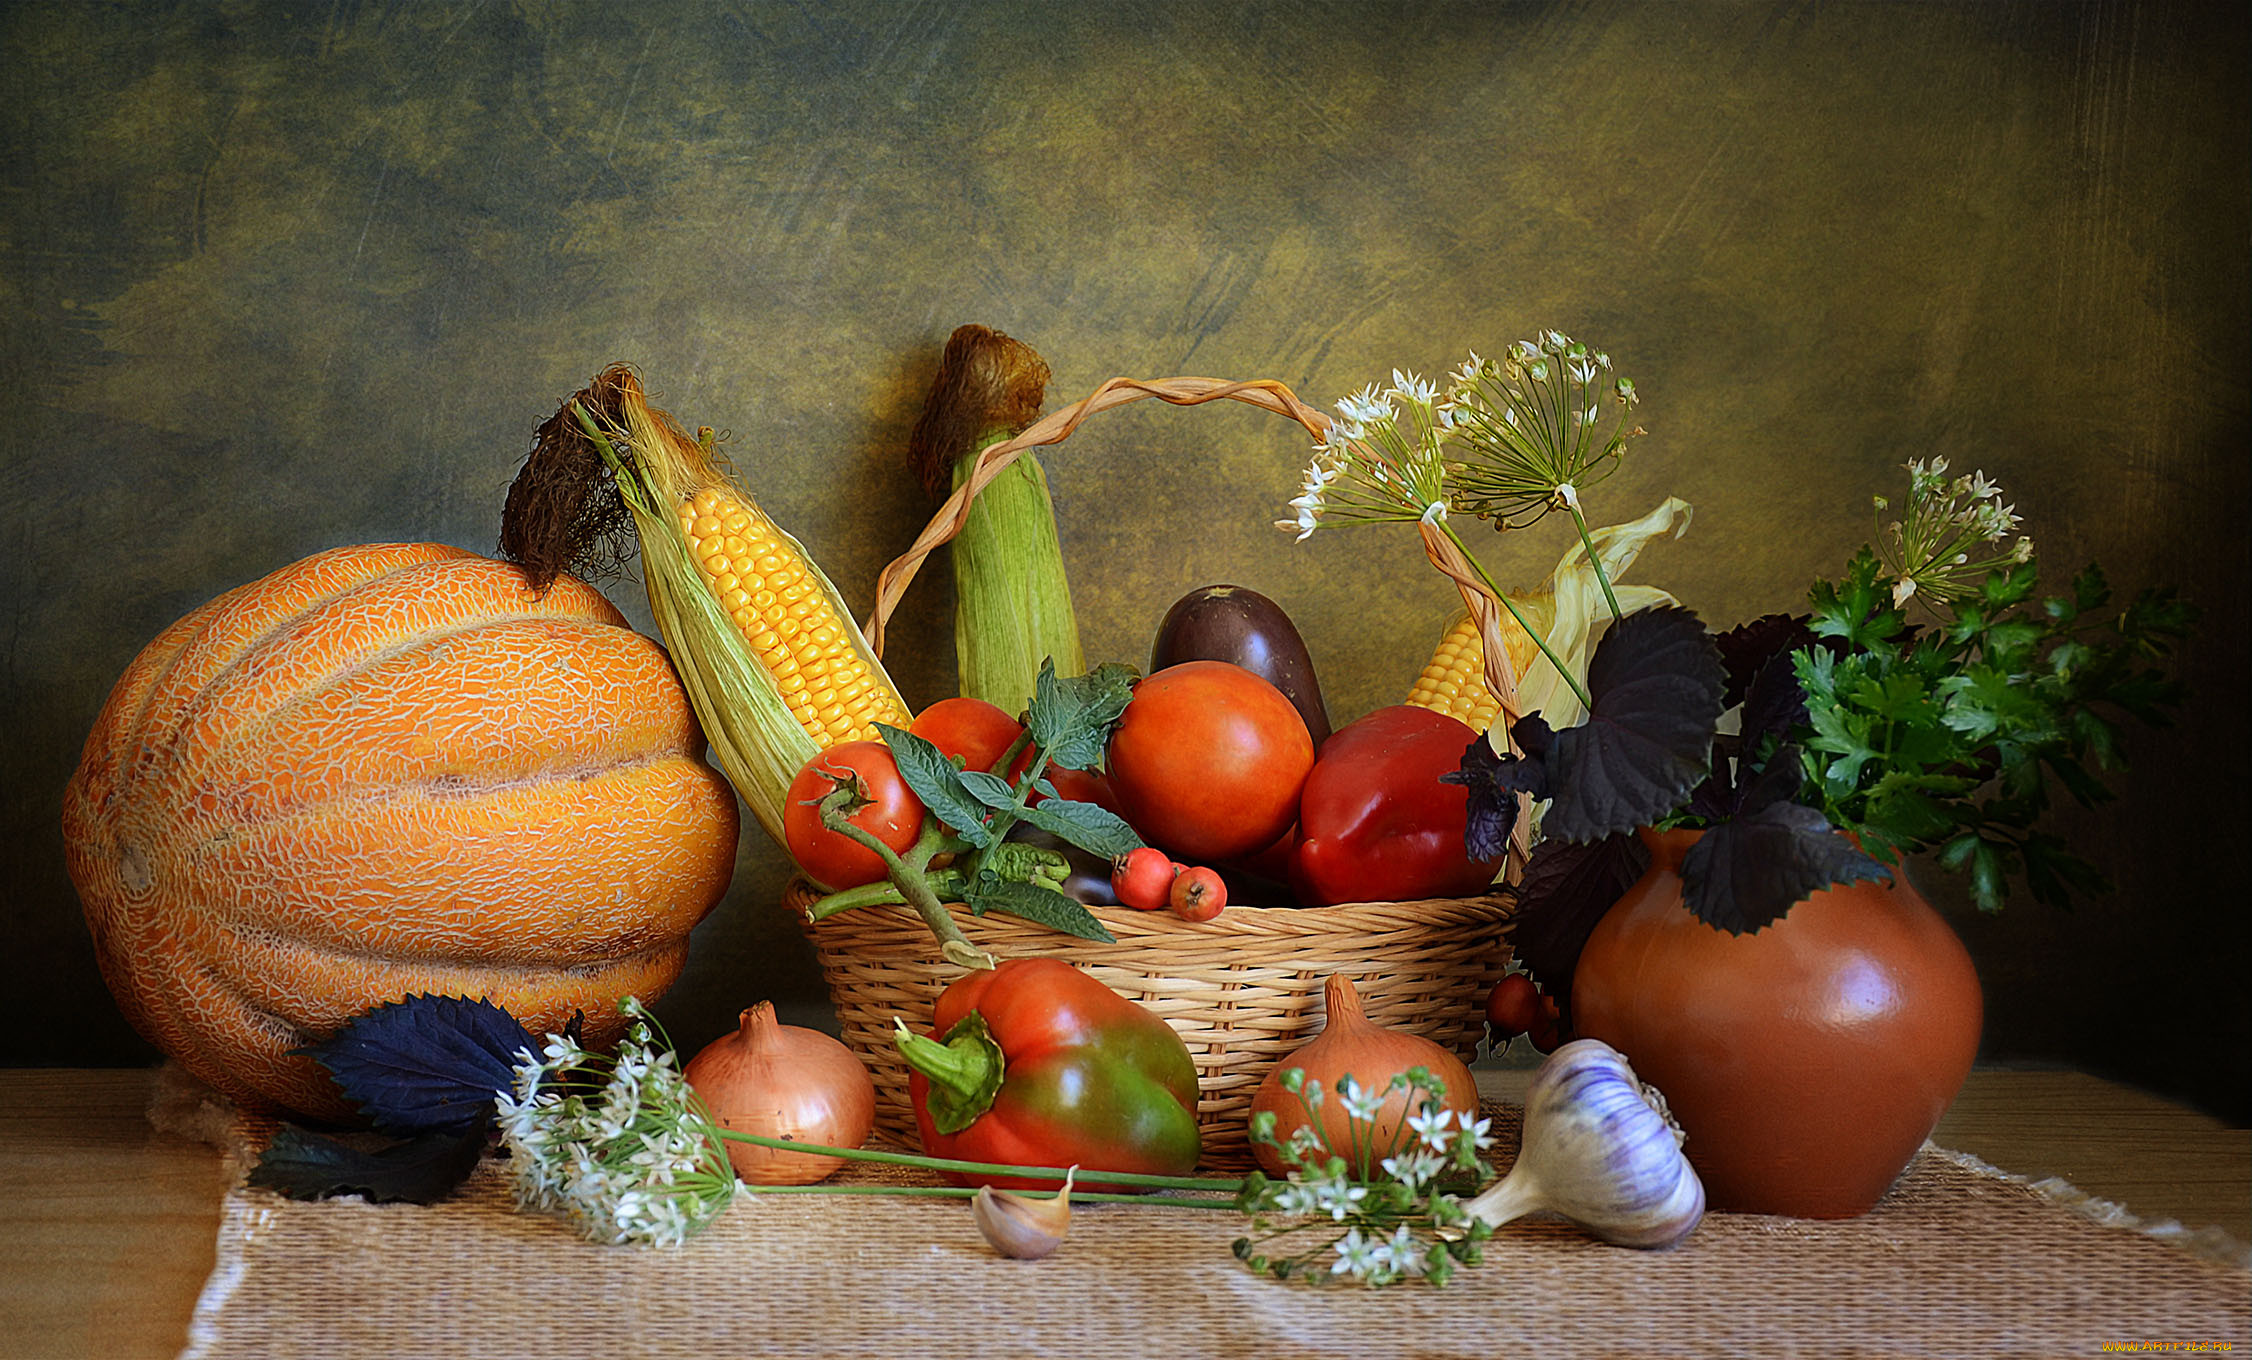 Урожай 1 цена. Натюрморт с овощами. Натюрморт с фруктами. Натюрморт из овощей и фруктов. Осенние овощи.